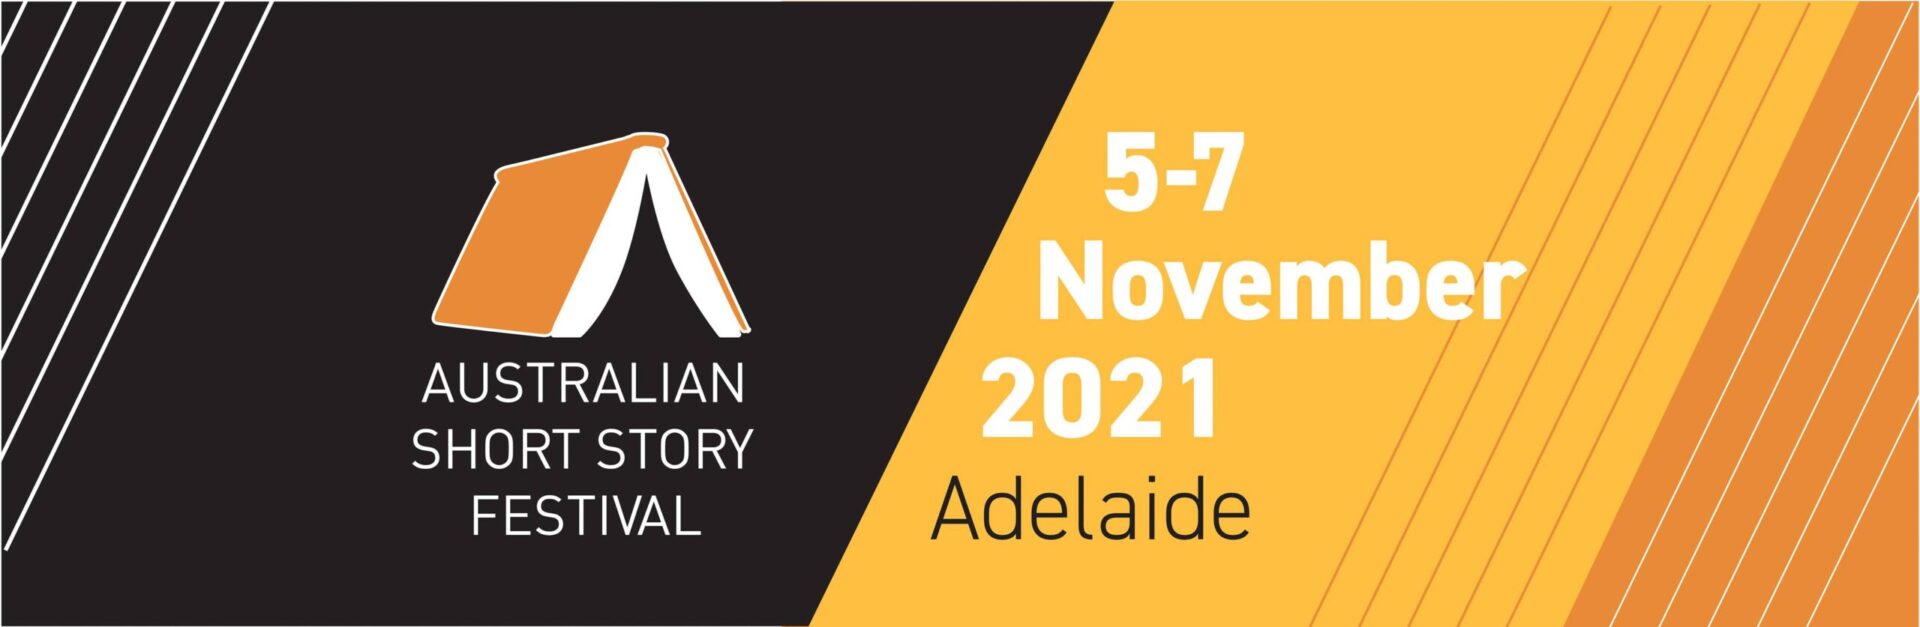 About Australian Short Story Festival Inc